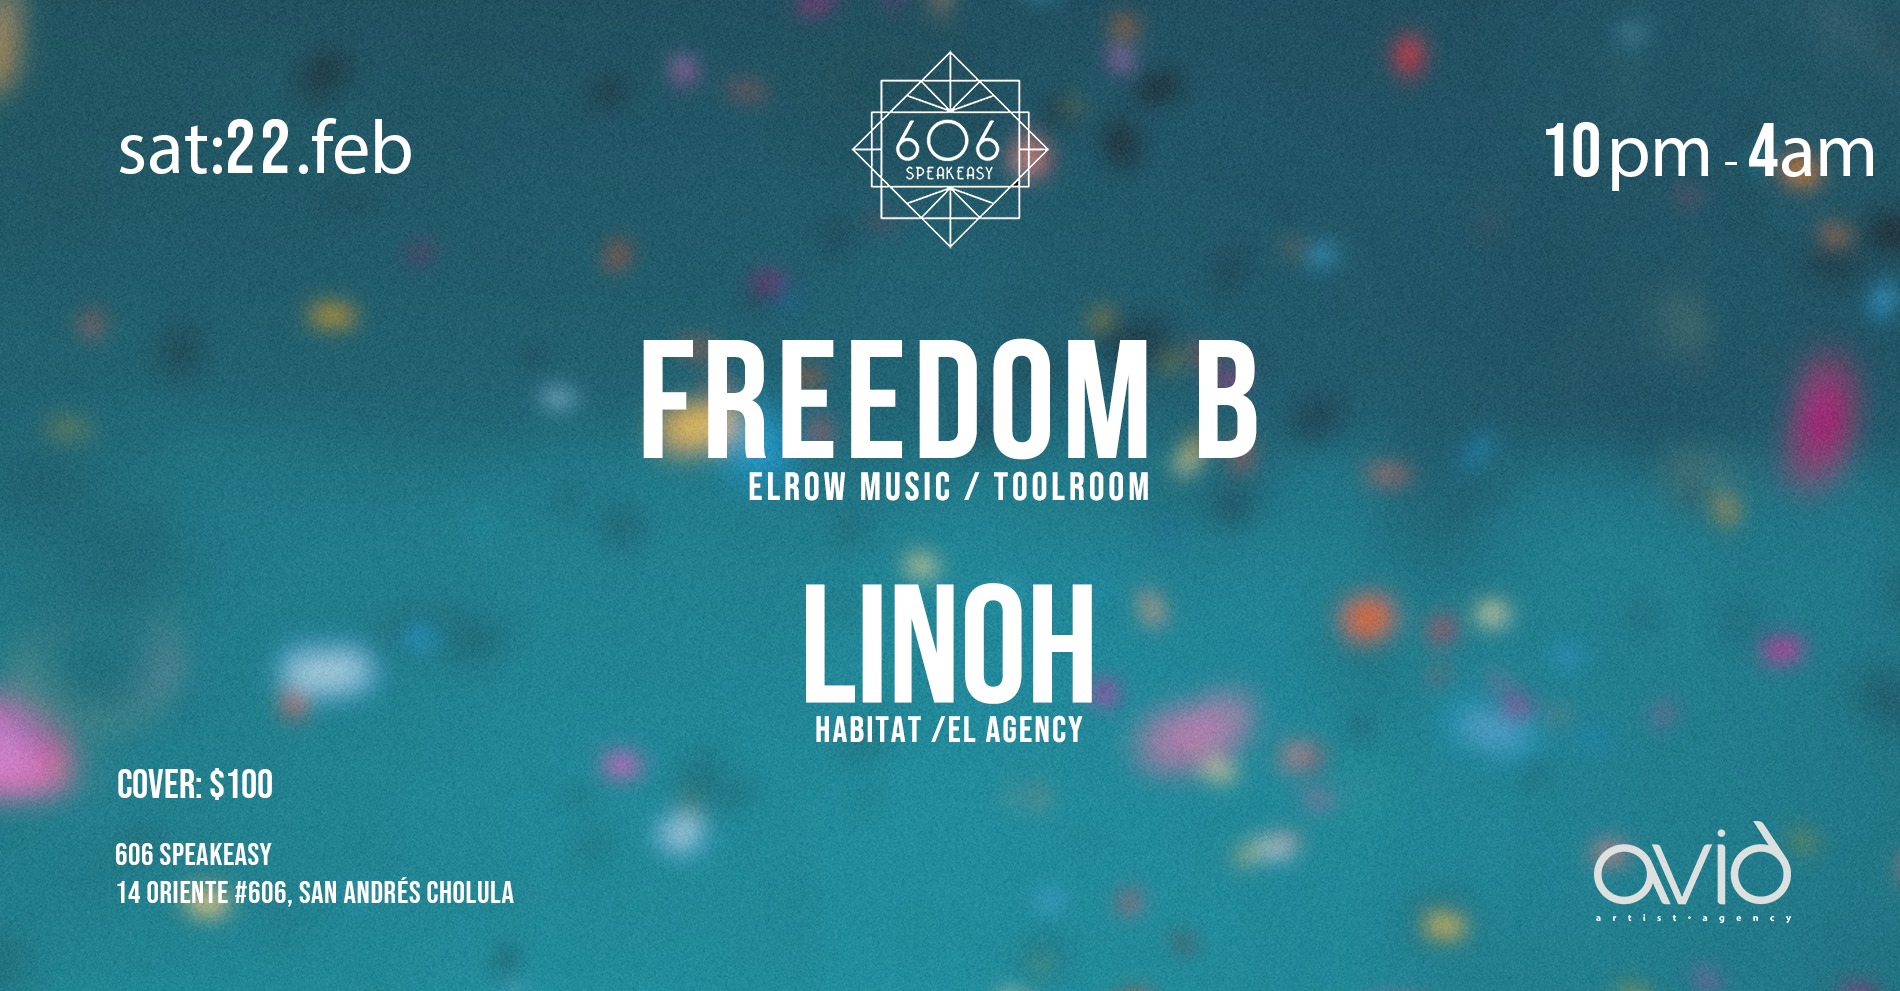 Avid Takeover presents FreedomB & Linoh